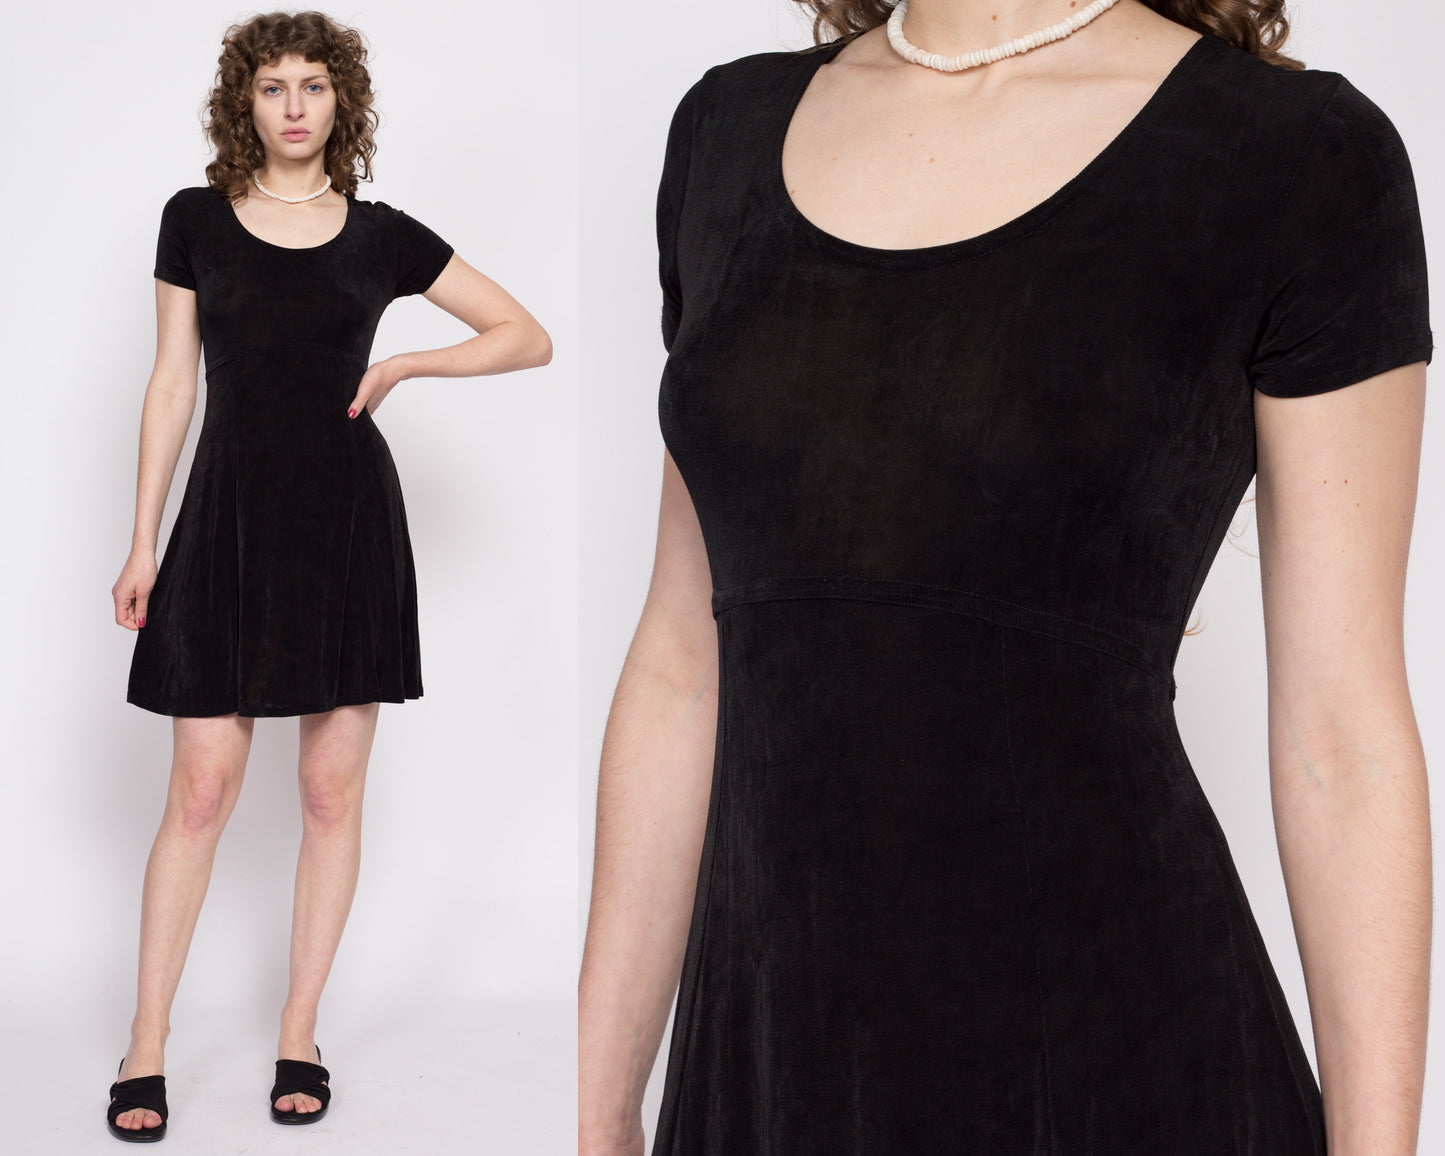 90s Minimalist Black Slinky Mini Dress - Small to Medium | Vintage Short Sleeve Stretchy Scoop Neck Grunge Dress